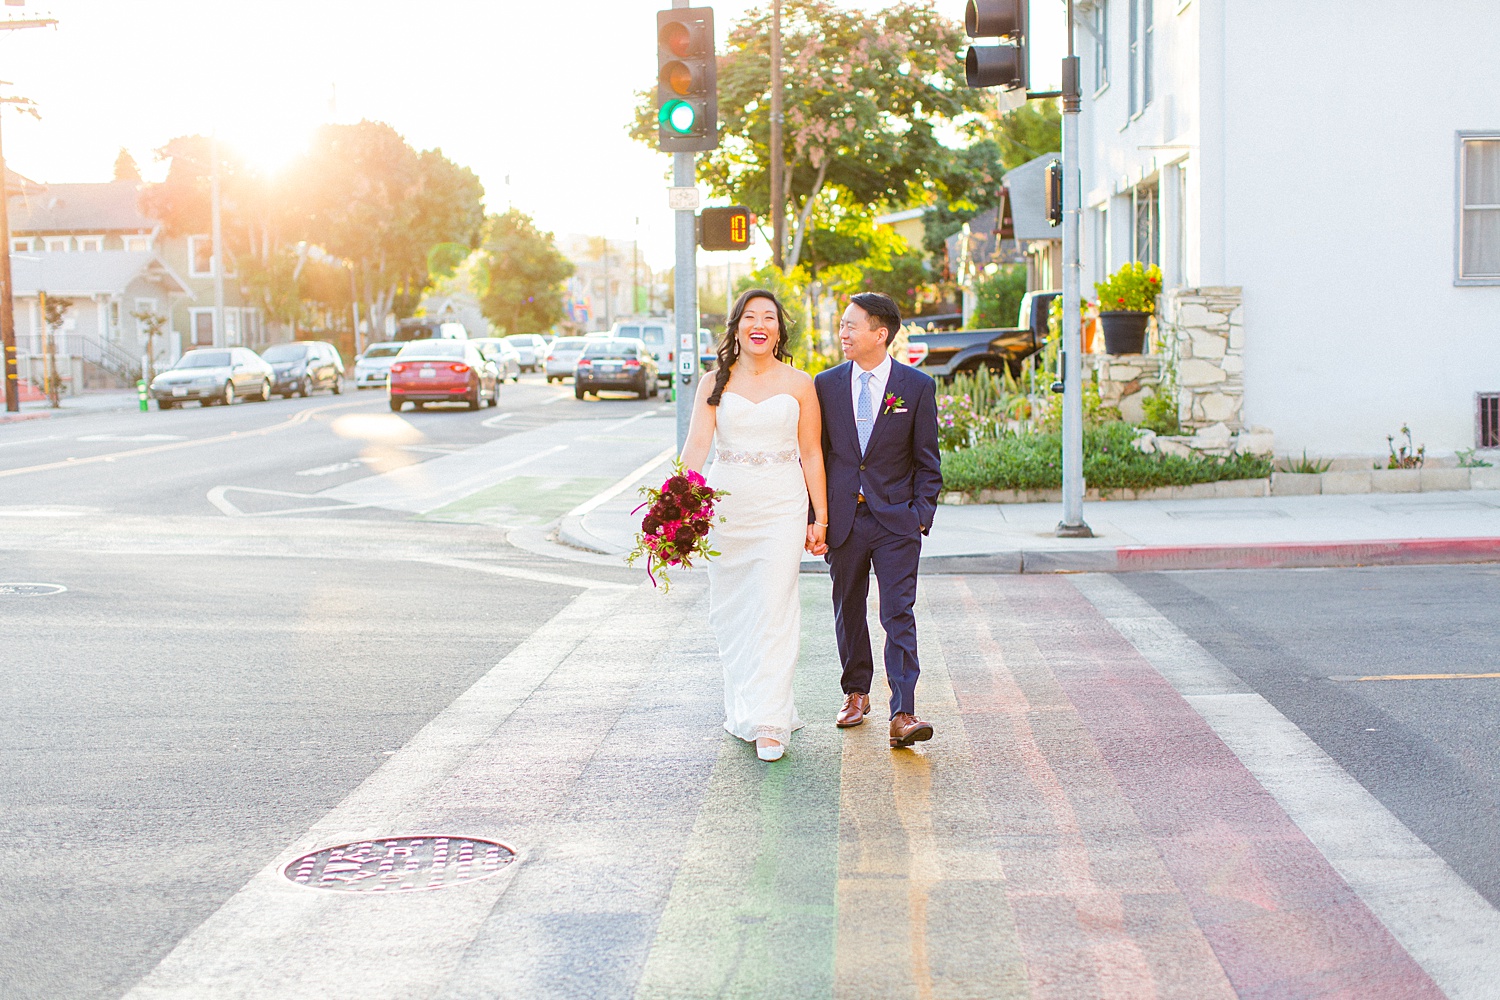 Ebell Long Beach | Orange County Wedding Photographer | The Vondys